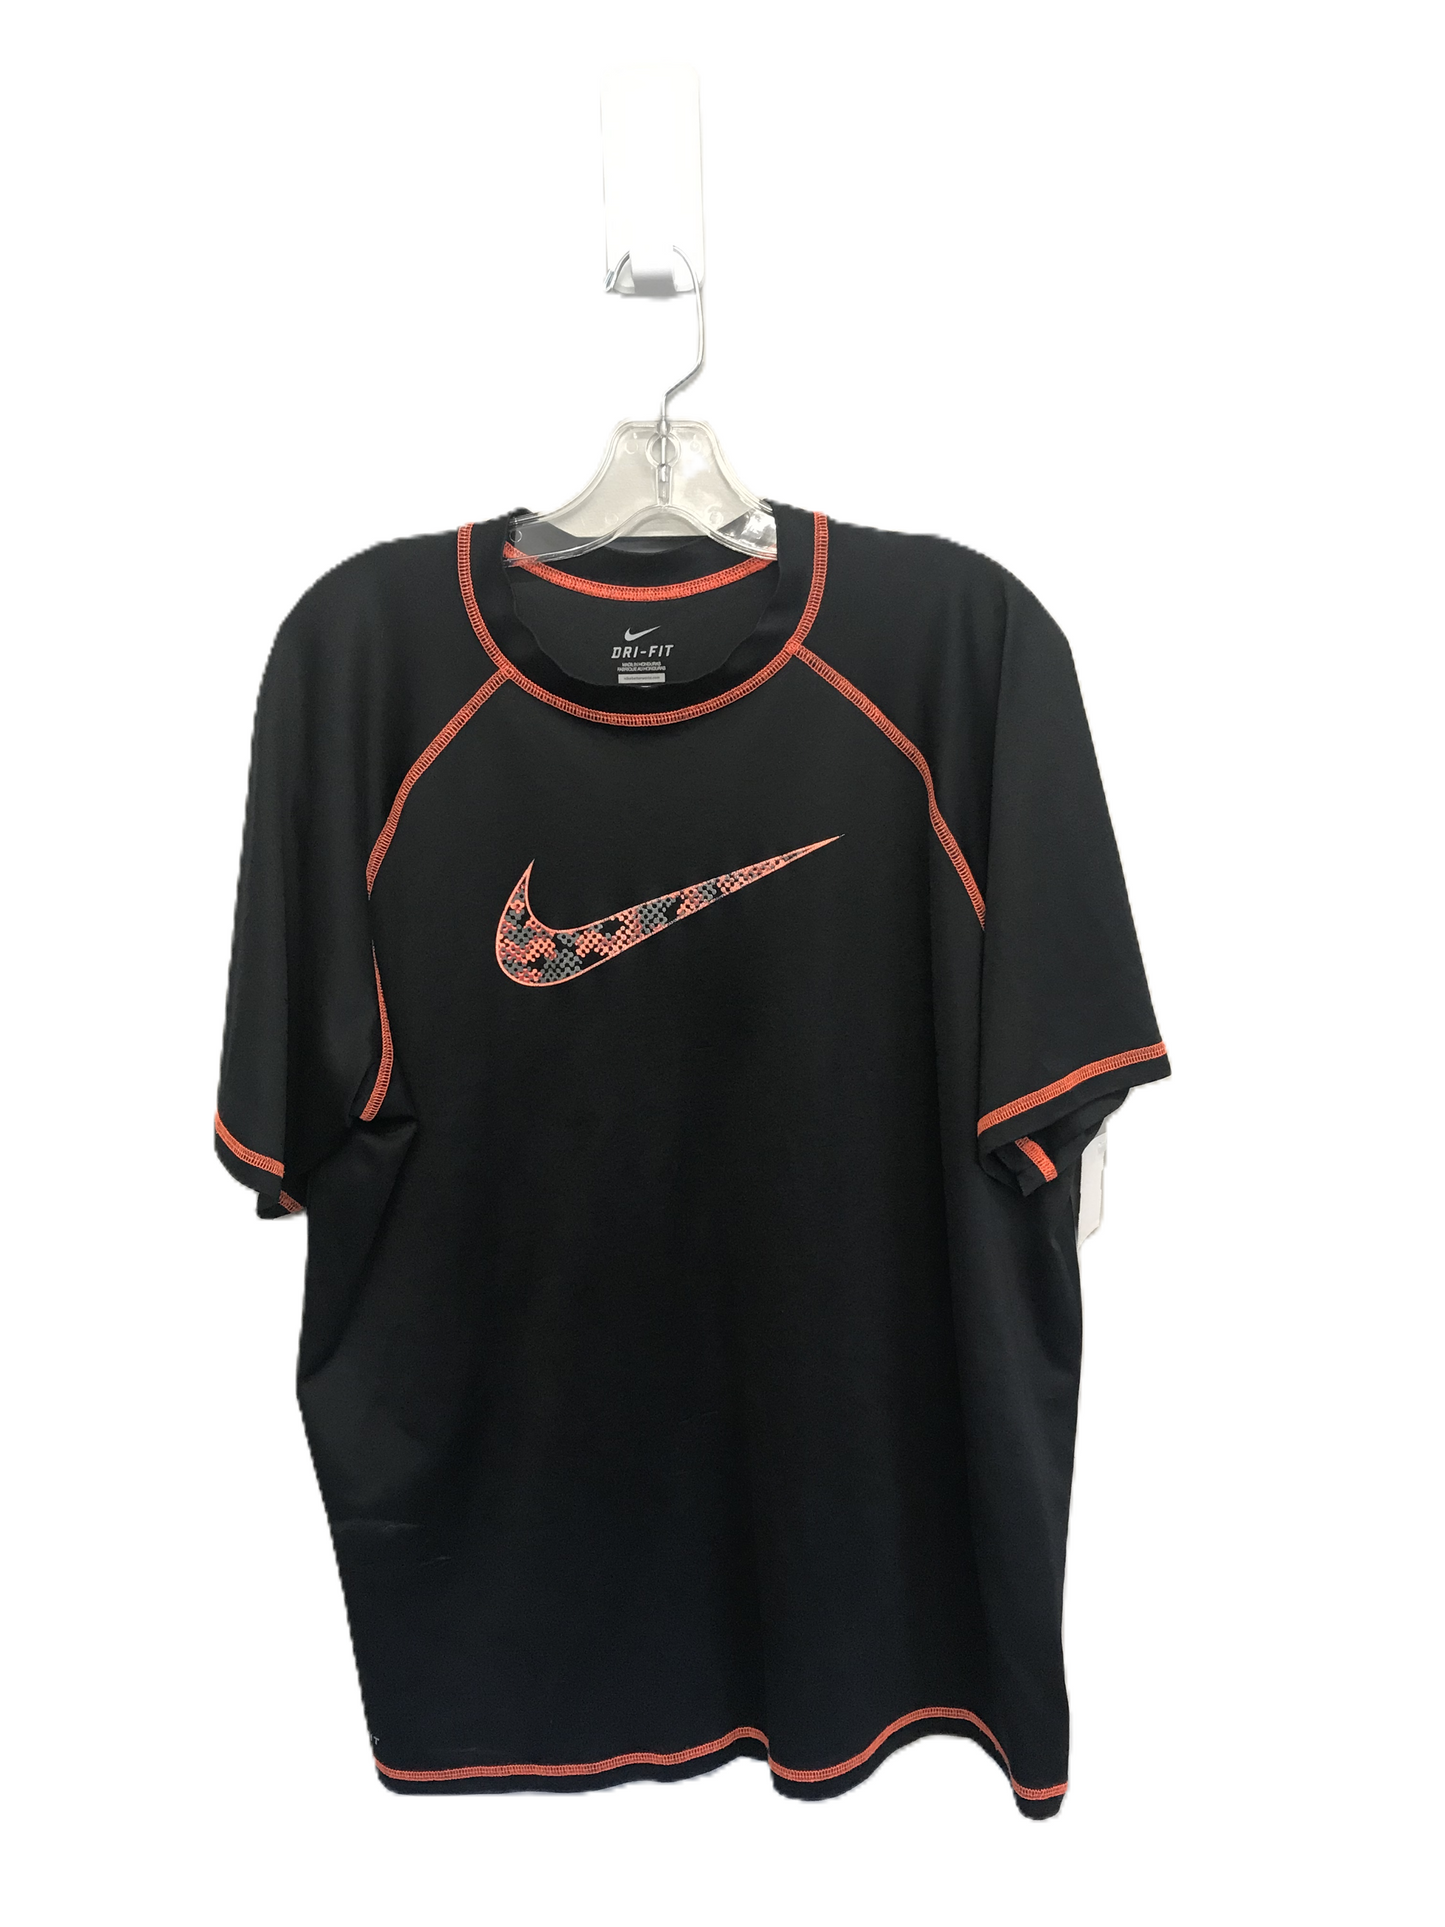 Black & Orange Athletic Top Short Sleeve By Nike Apparel, Size: 1x